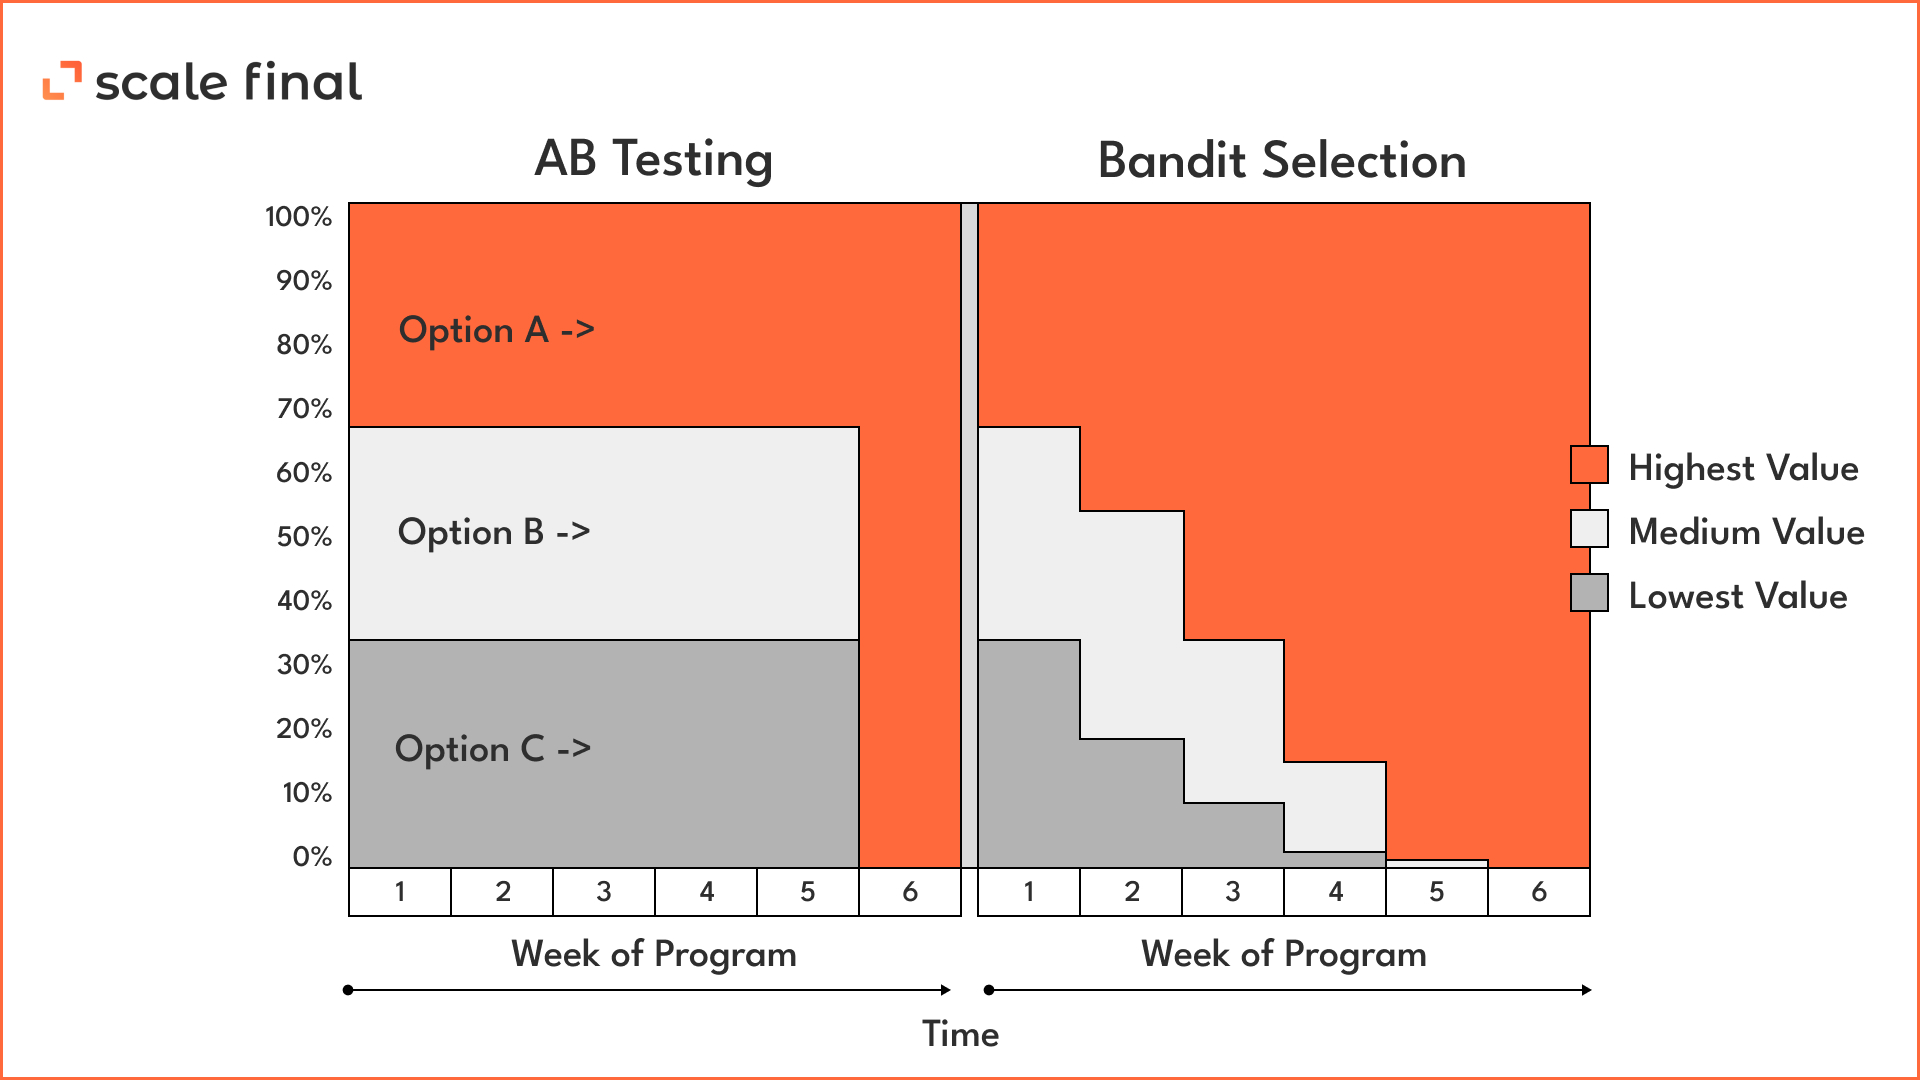 ab testing v bandit selection 